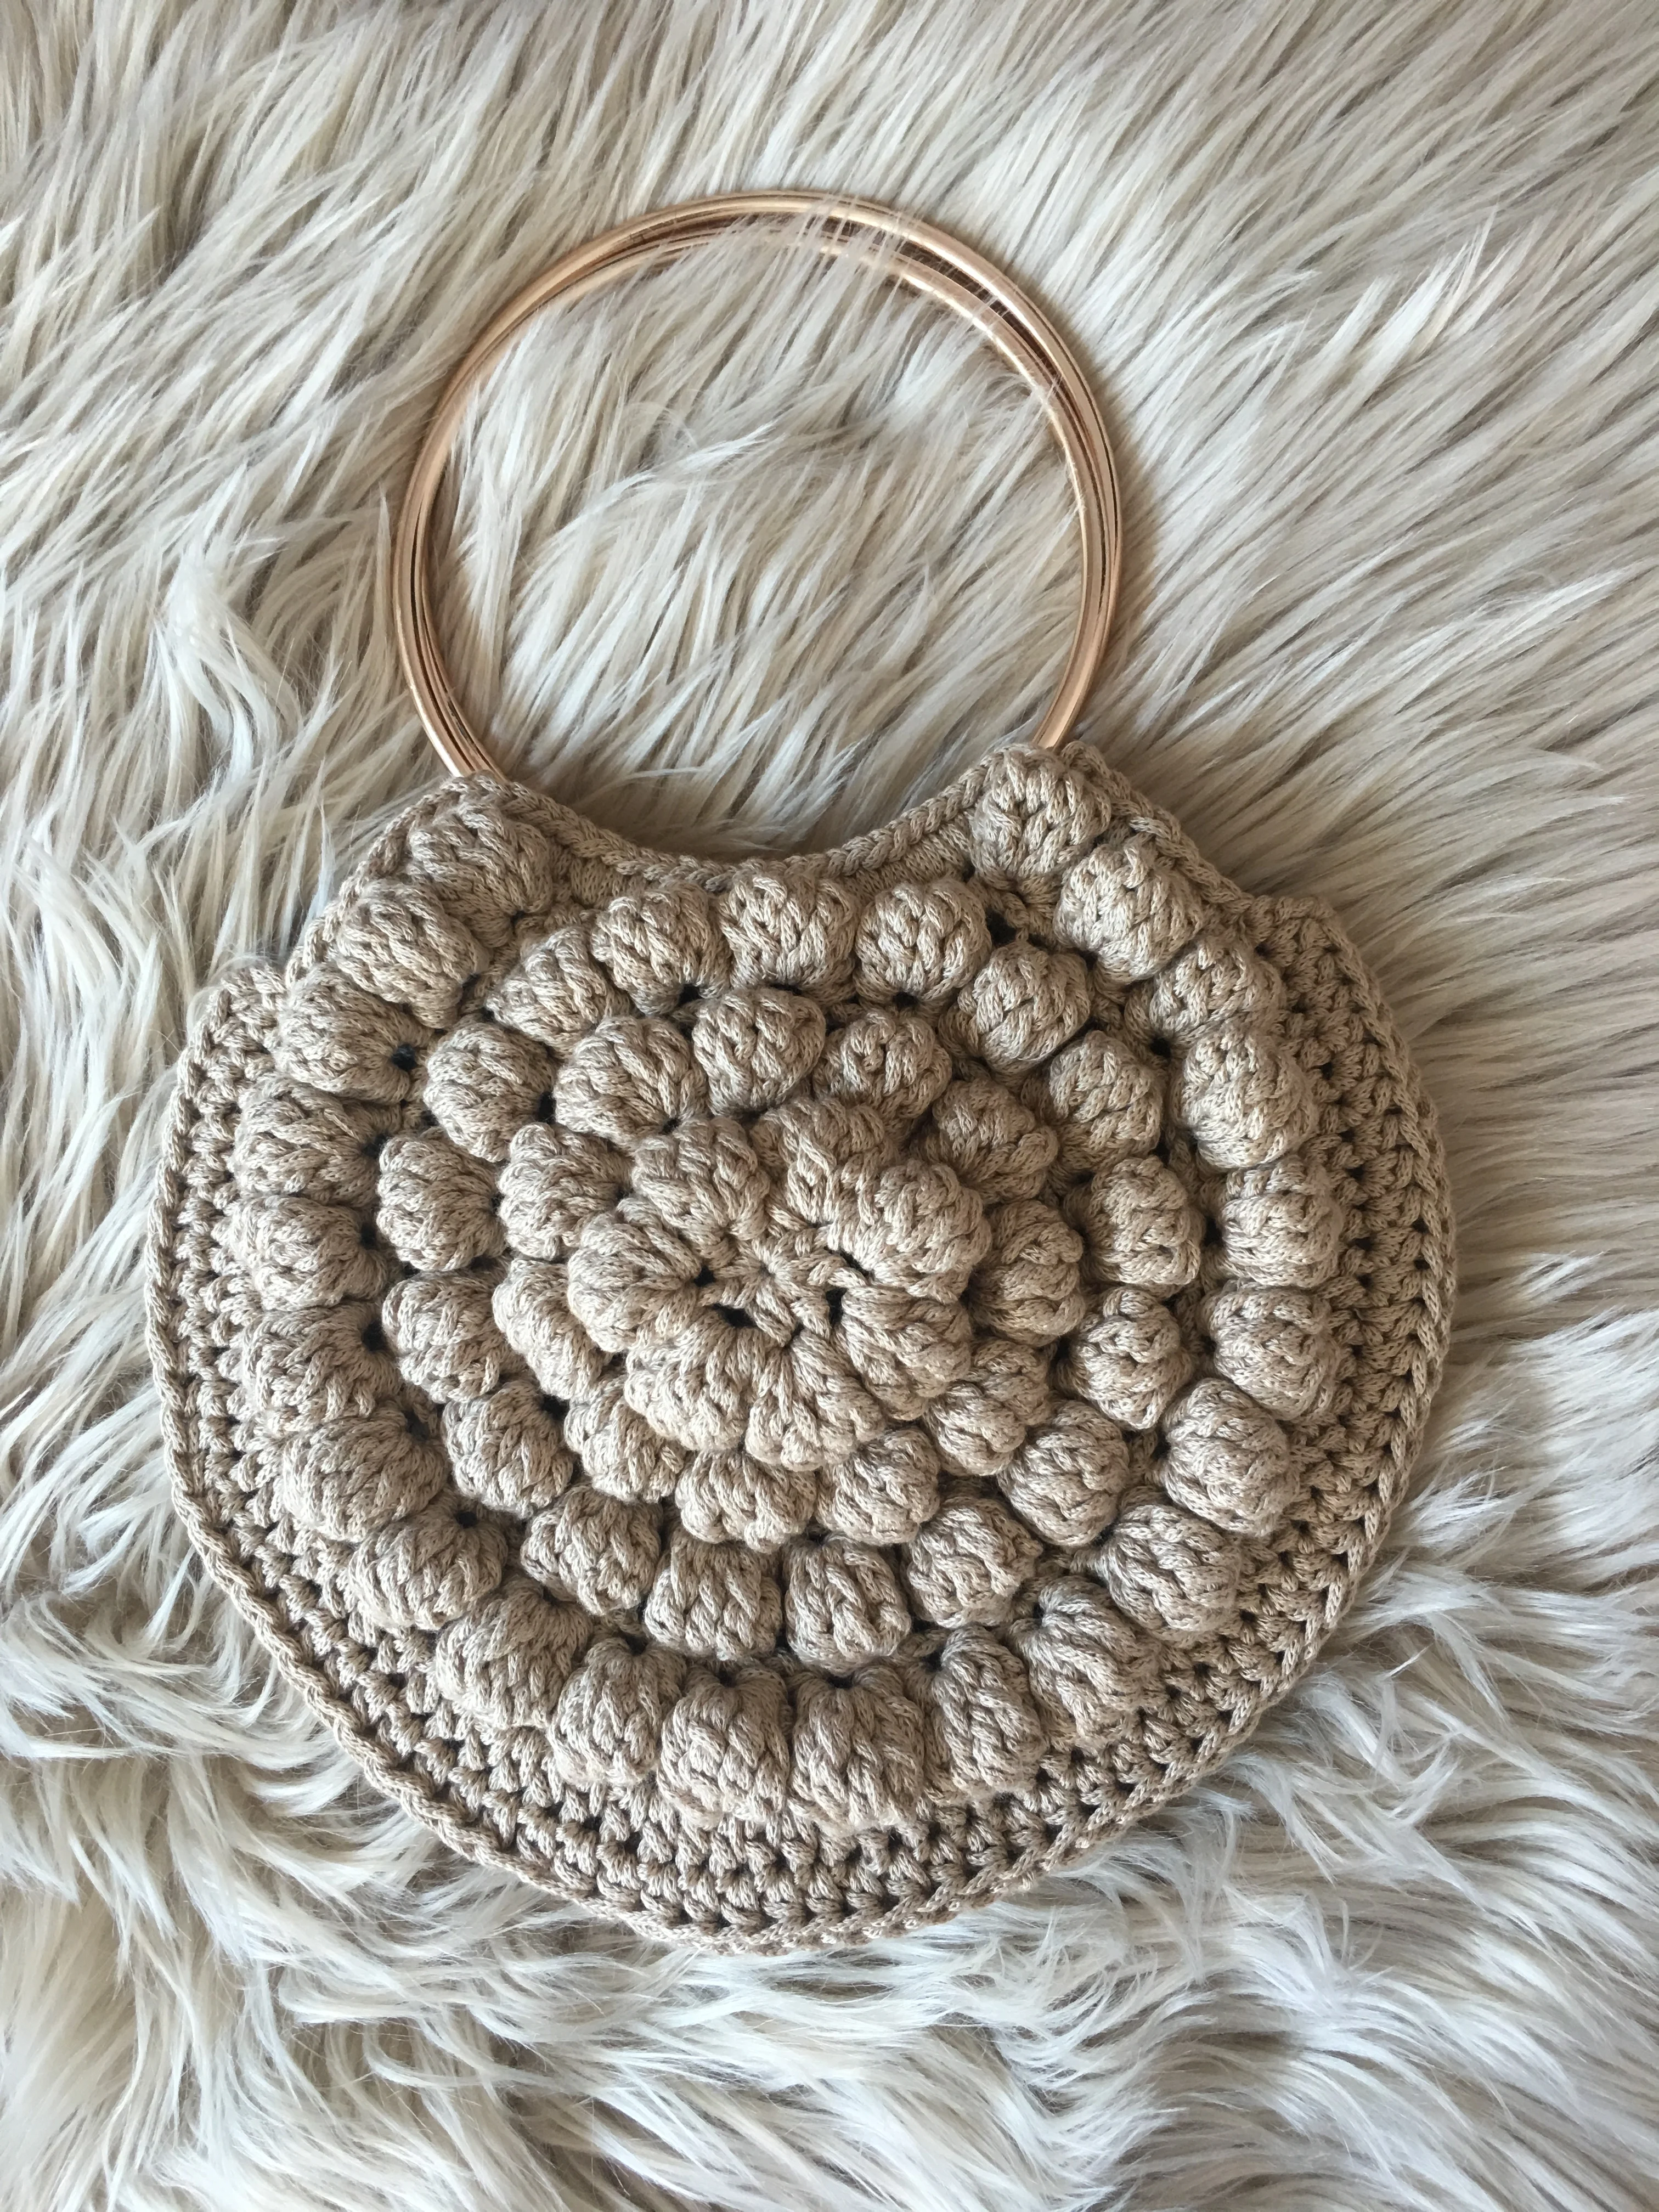 Circular de Crochet Bolsa de Ulla Johnson Lia Inspirado Bolso de Ganchillo de la Burbuja de la flor Bolso de mano bolso de la bolsa de libre envío rápido 1